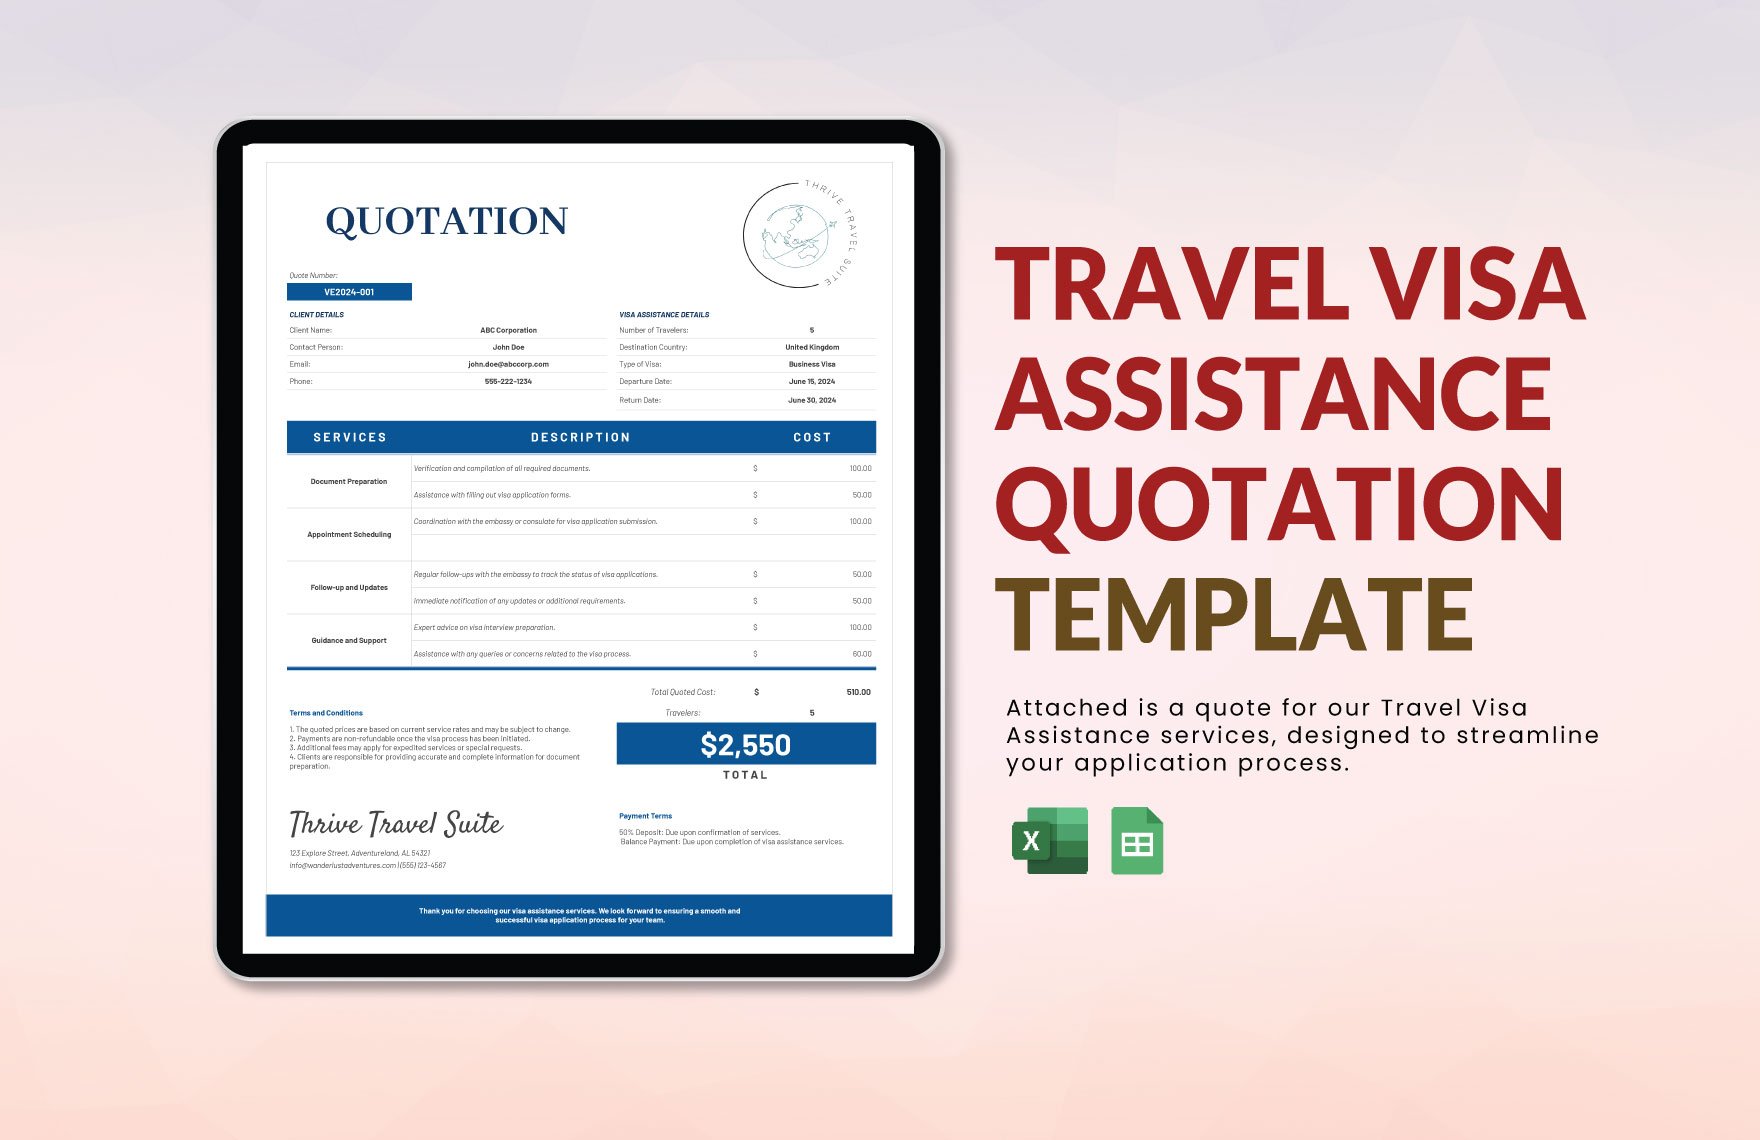 Travel VISA Assistance Quotation Template